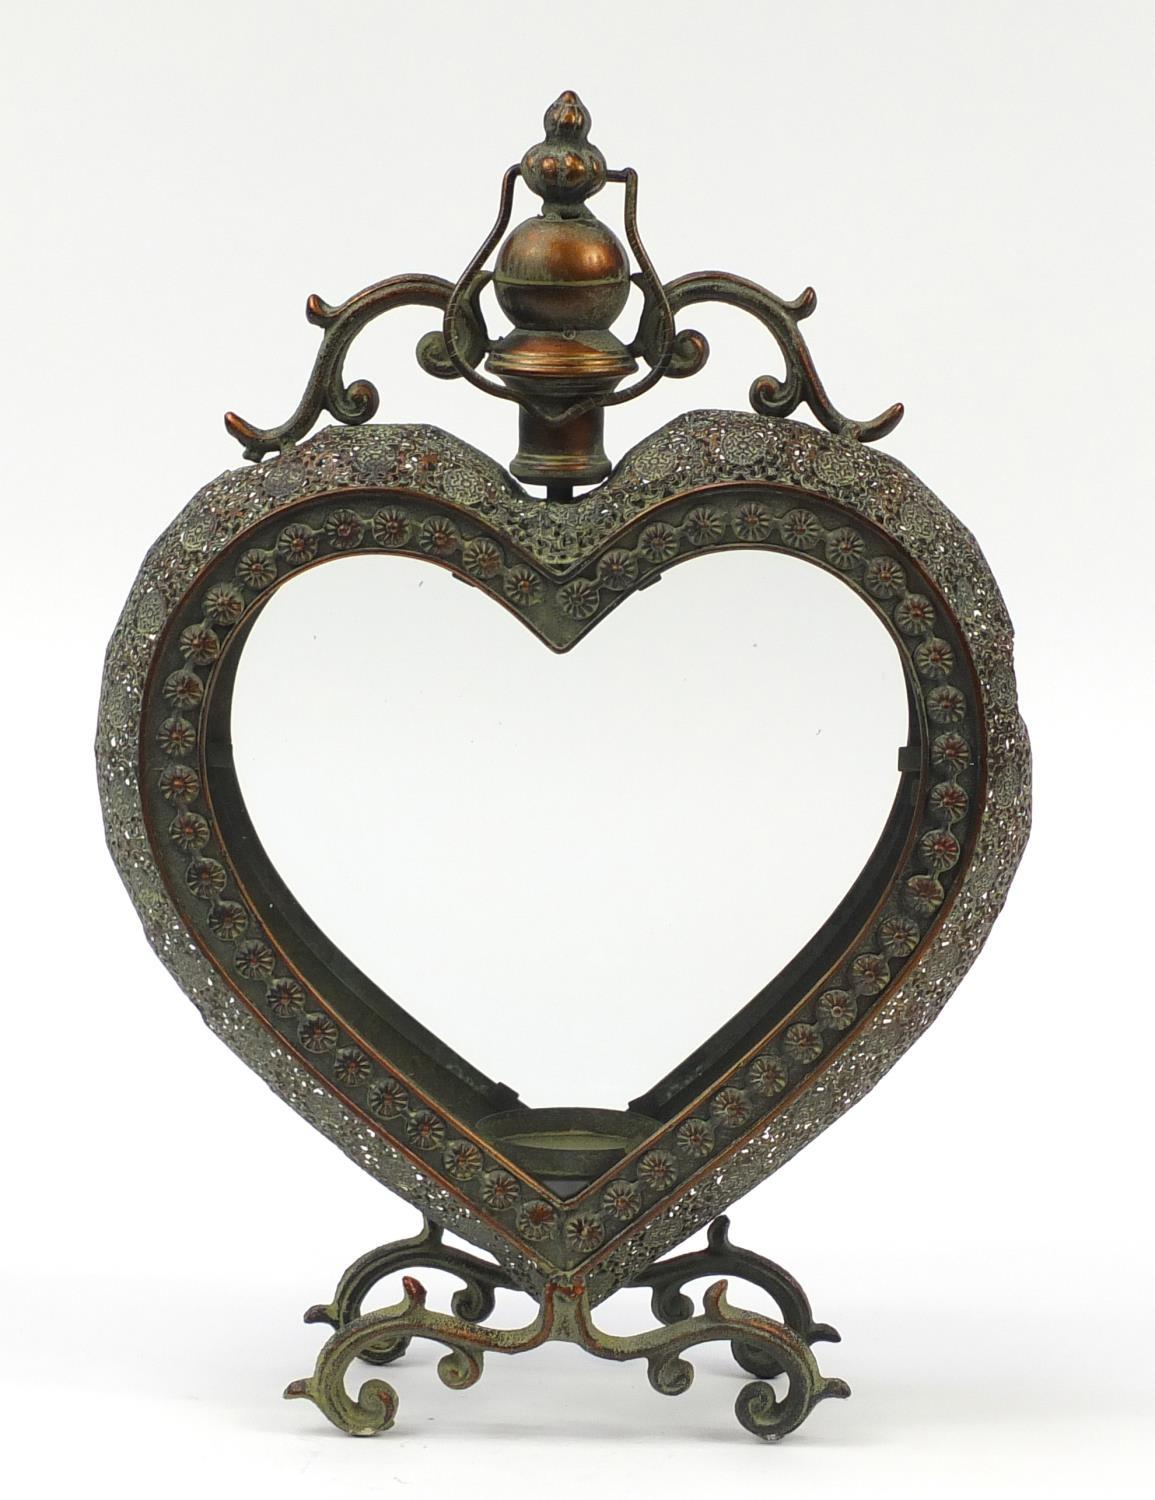 Pierced bronzed love heart design candle holder, 53cm high - Image 4 of 7